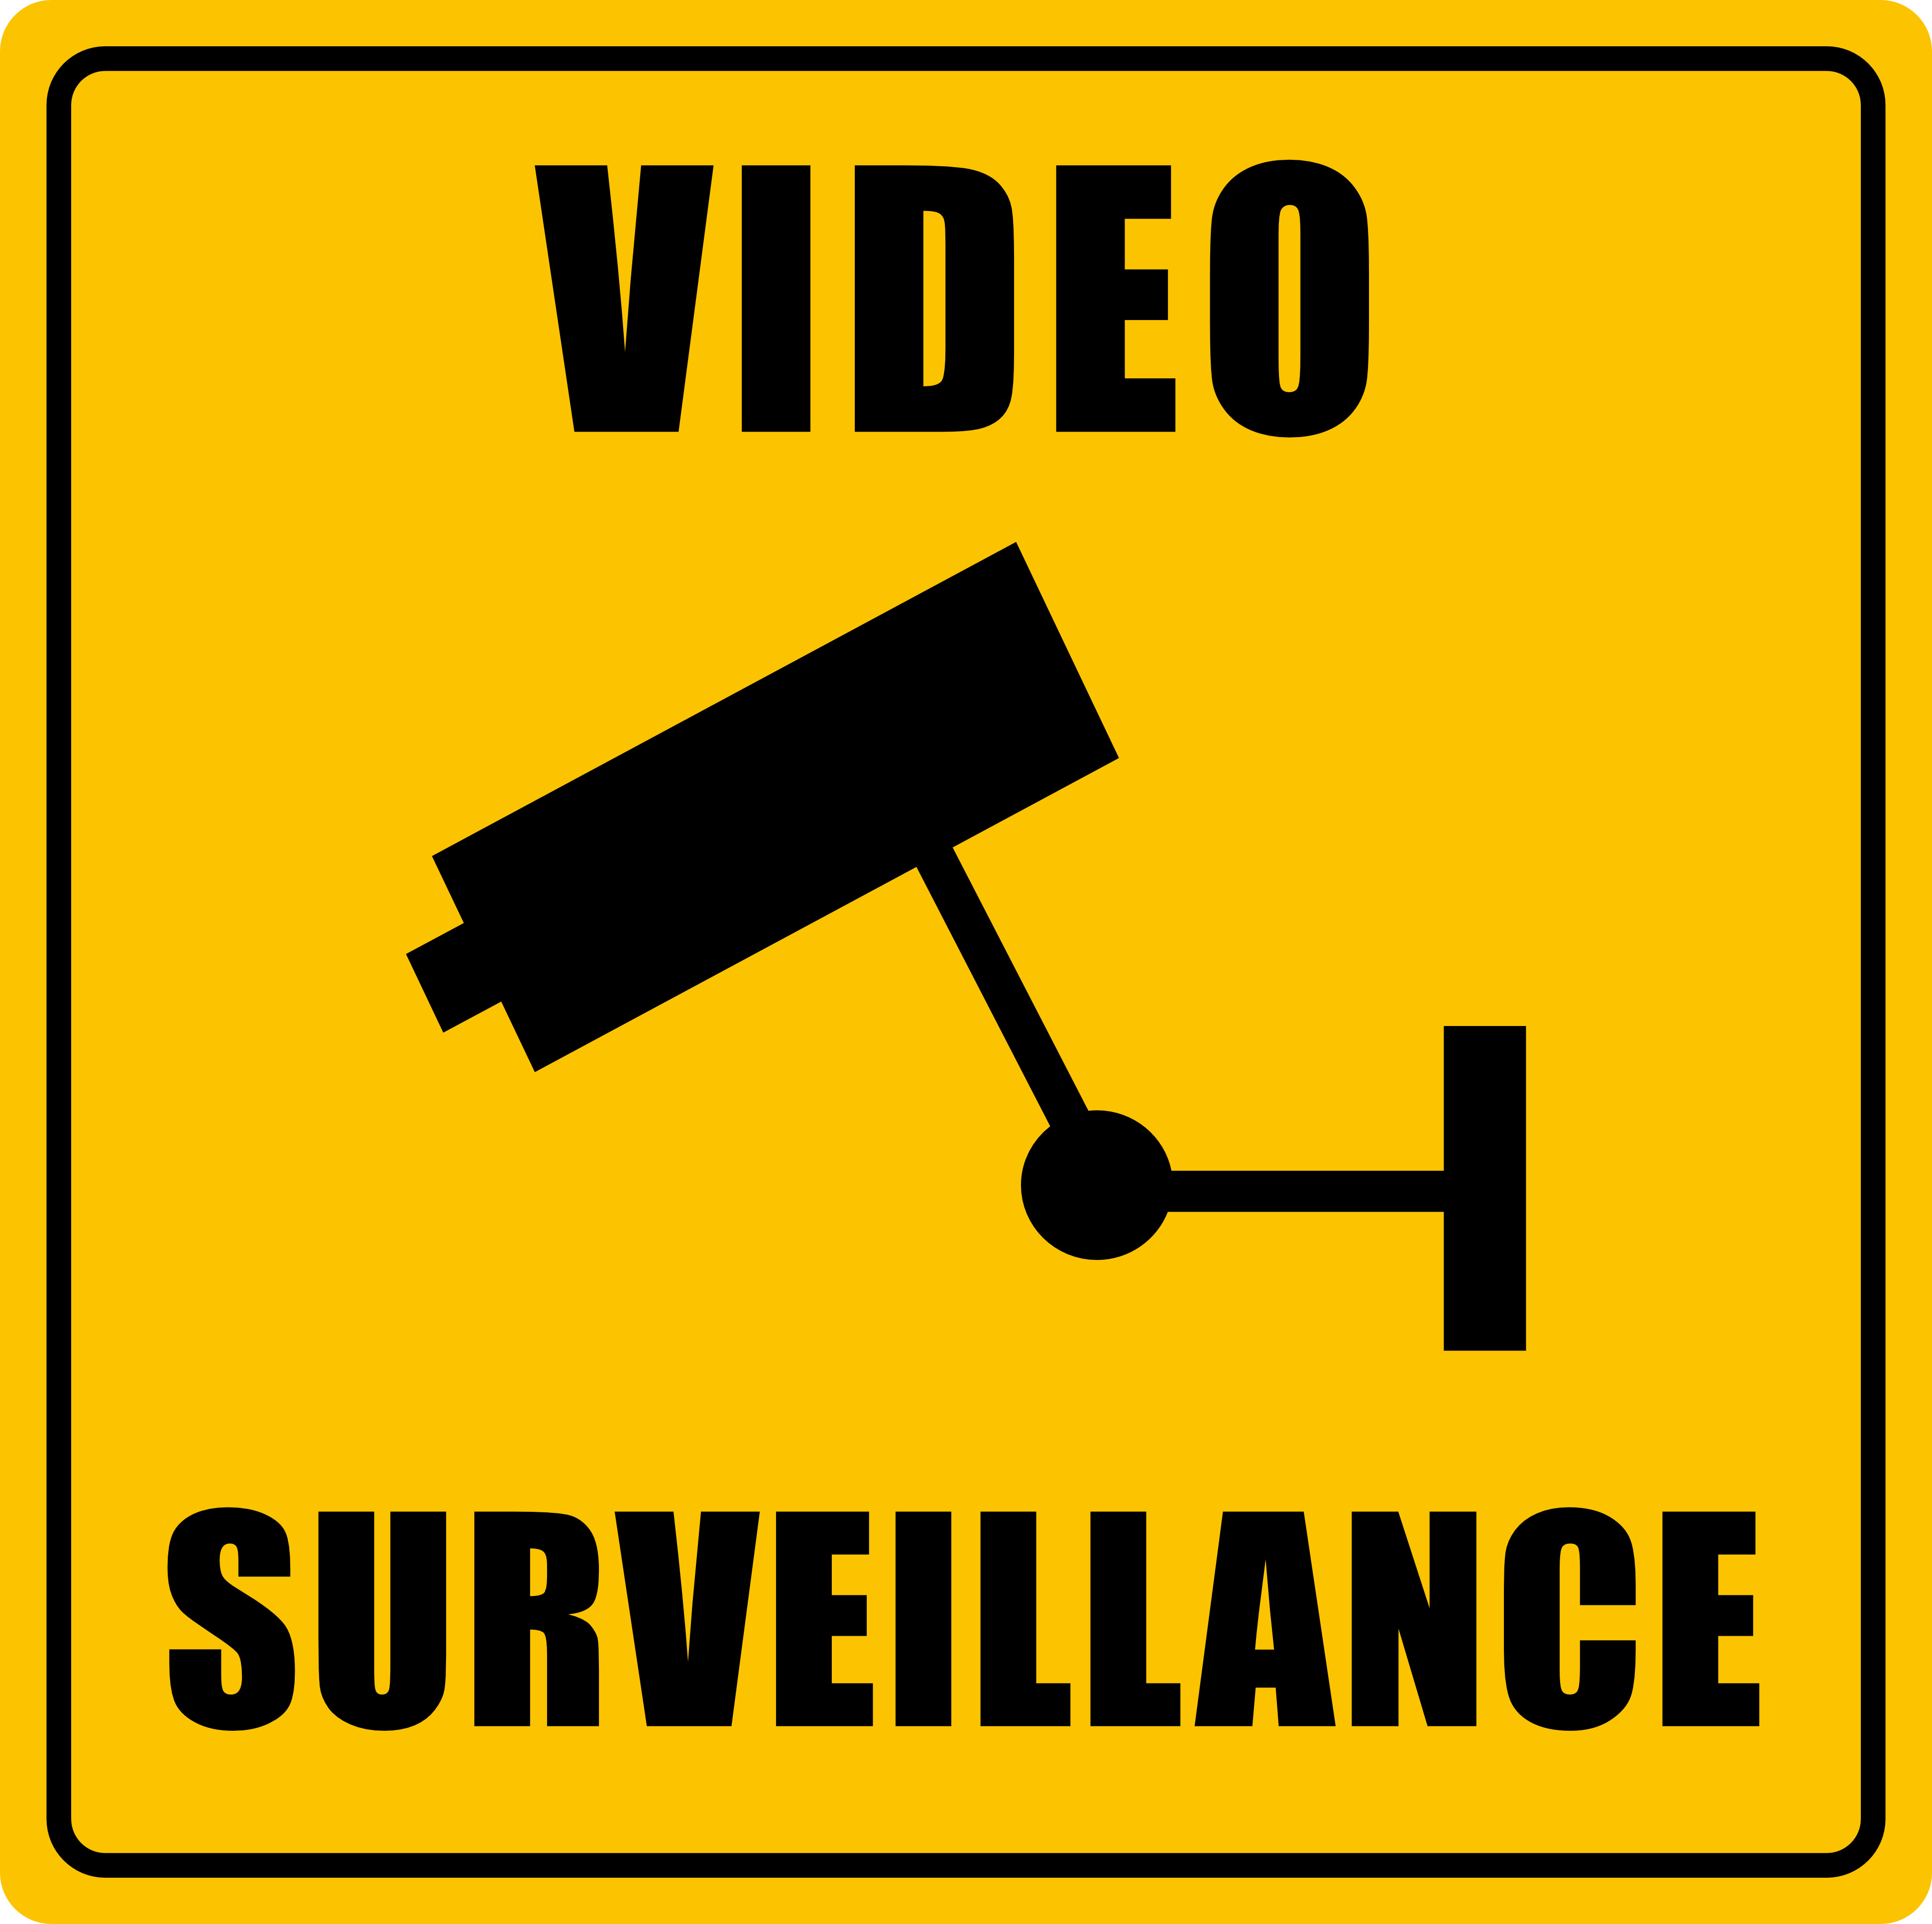 Security CCTV camera system - 3d rendering